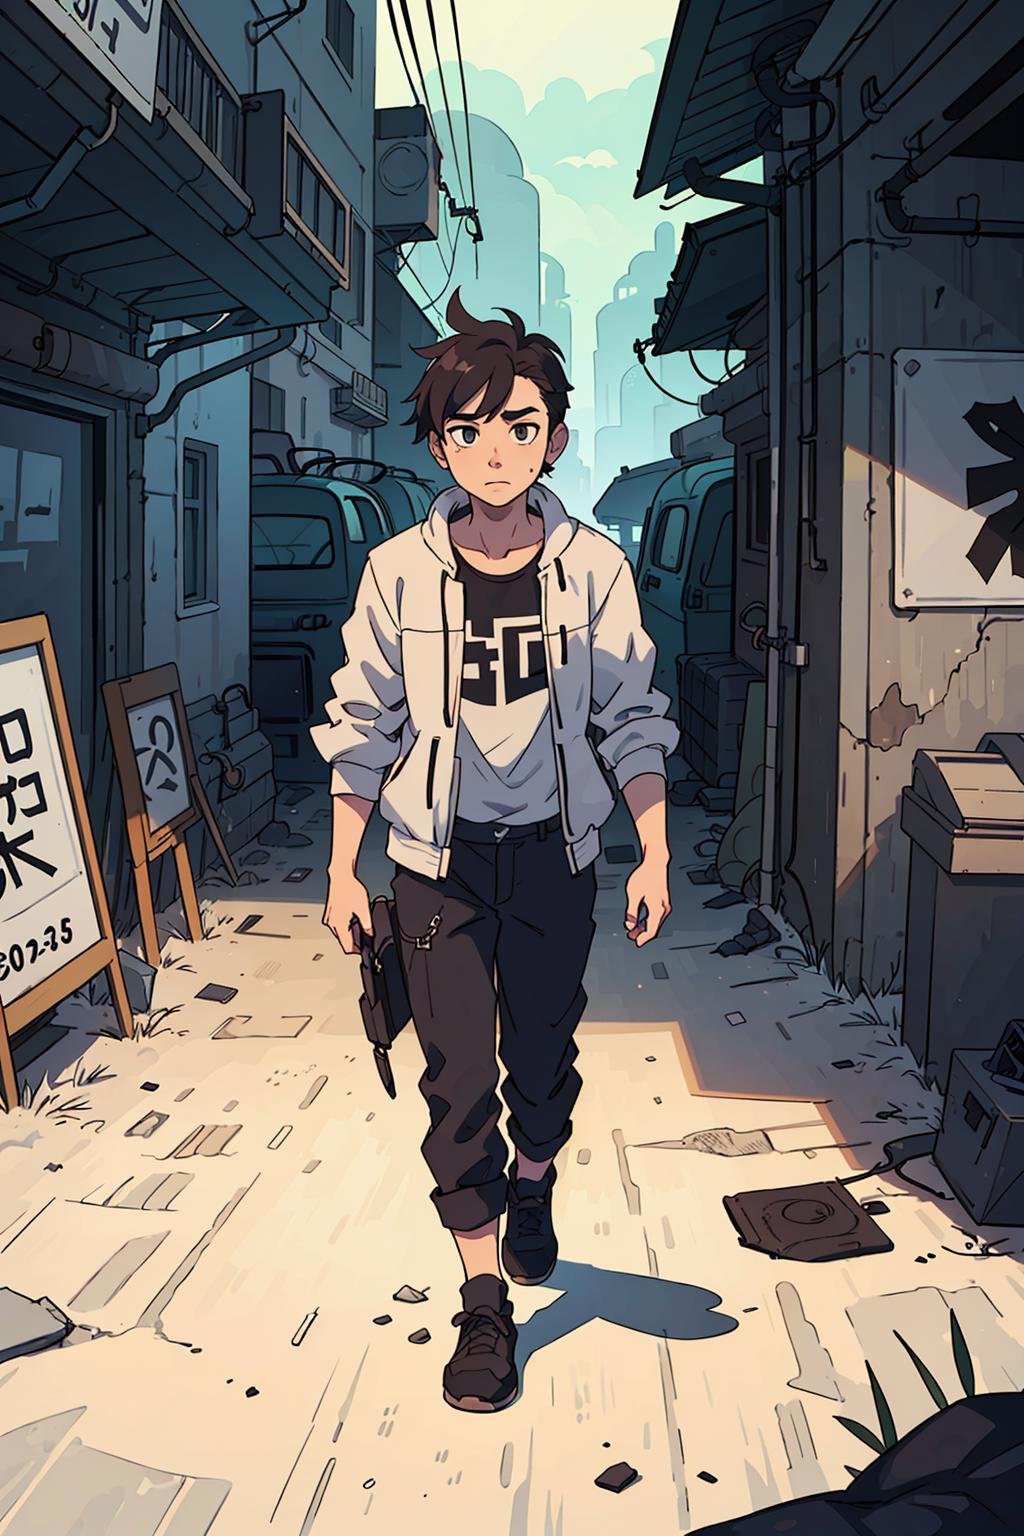 (best quality:0.8) perfect anime still frame, hyperpunk guy strolling through the (wasteland:1.2)